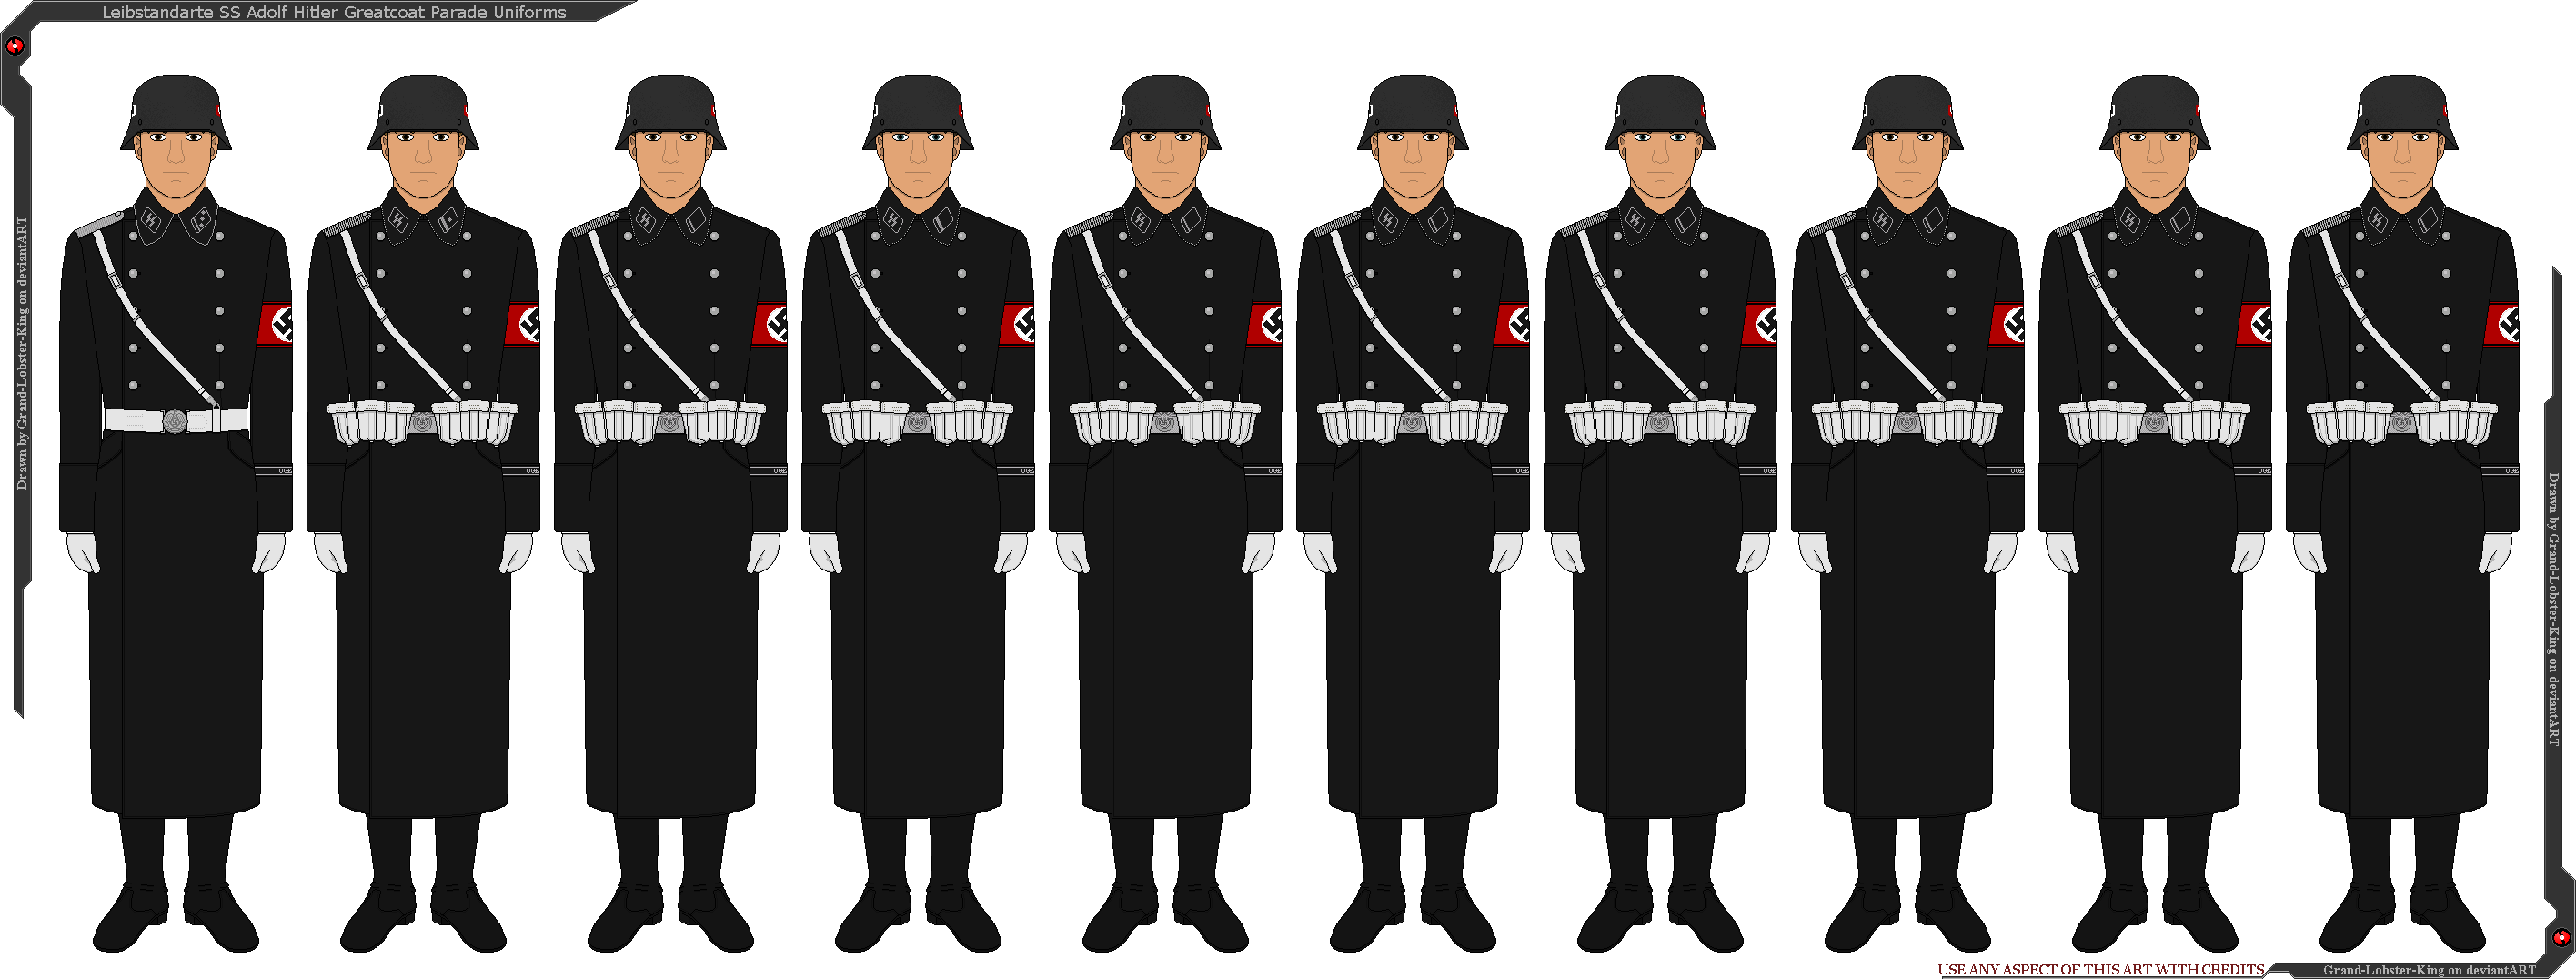 Leibstandarte SS Adolf Hitler Parade Uniforms by Grand-Lobster-King on